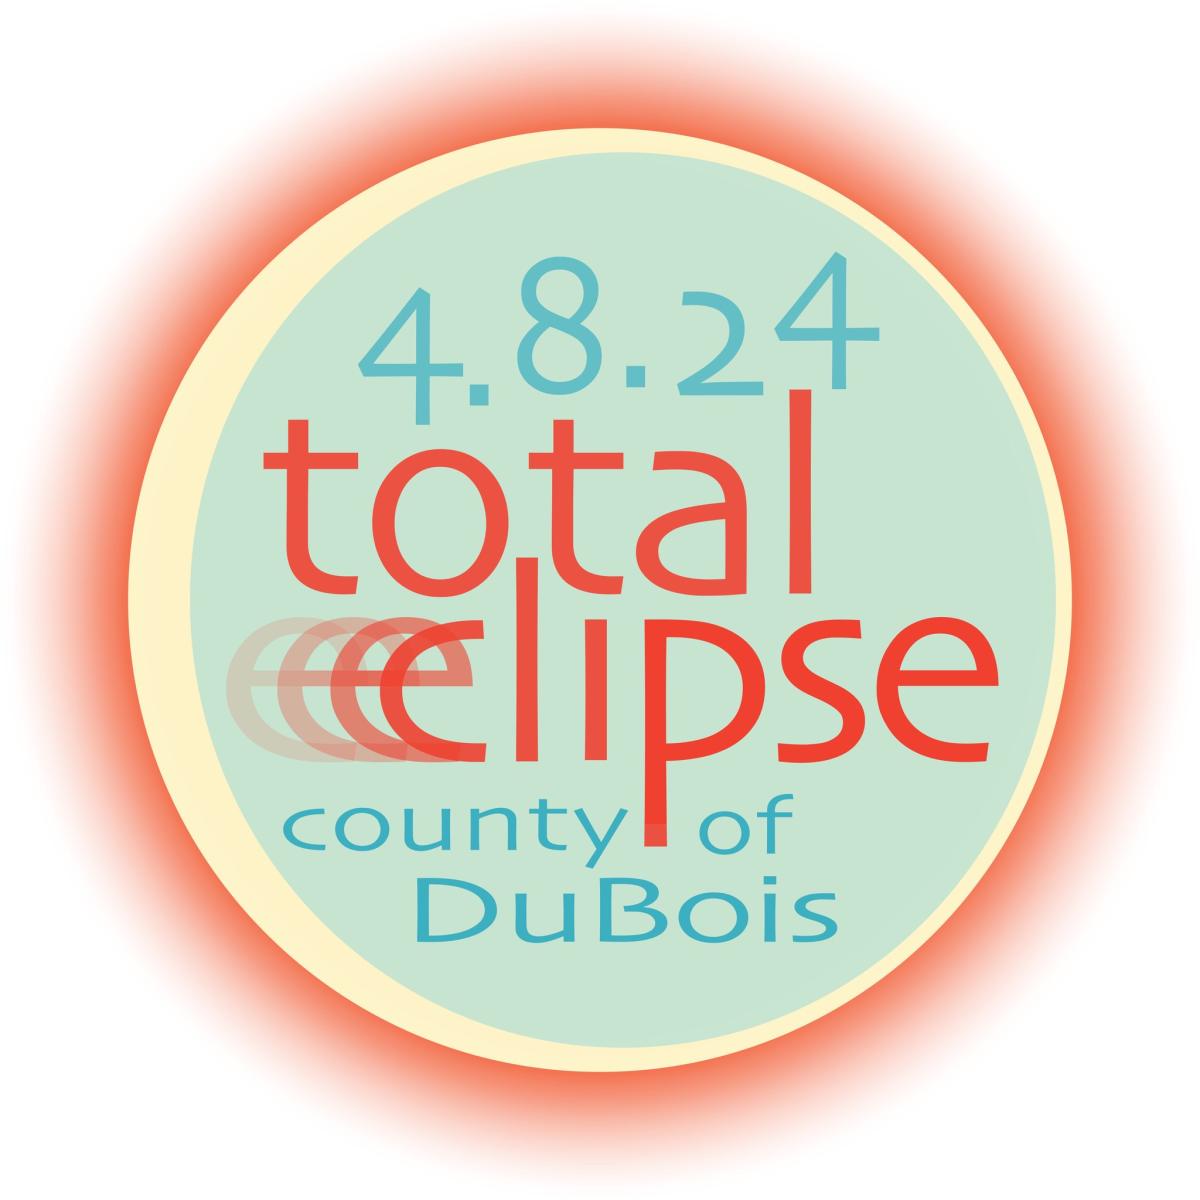 DuBois County Eclipse